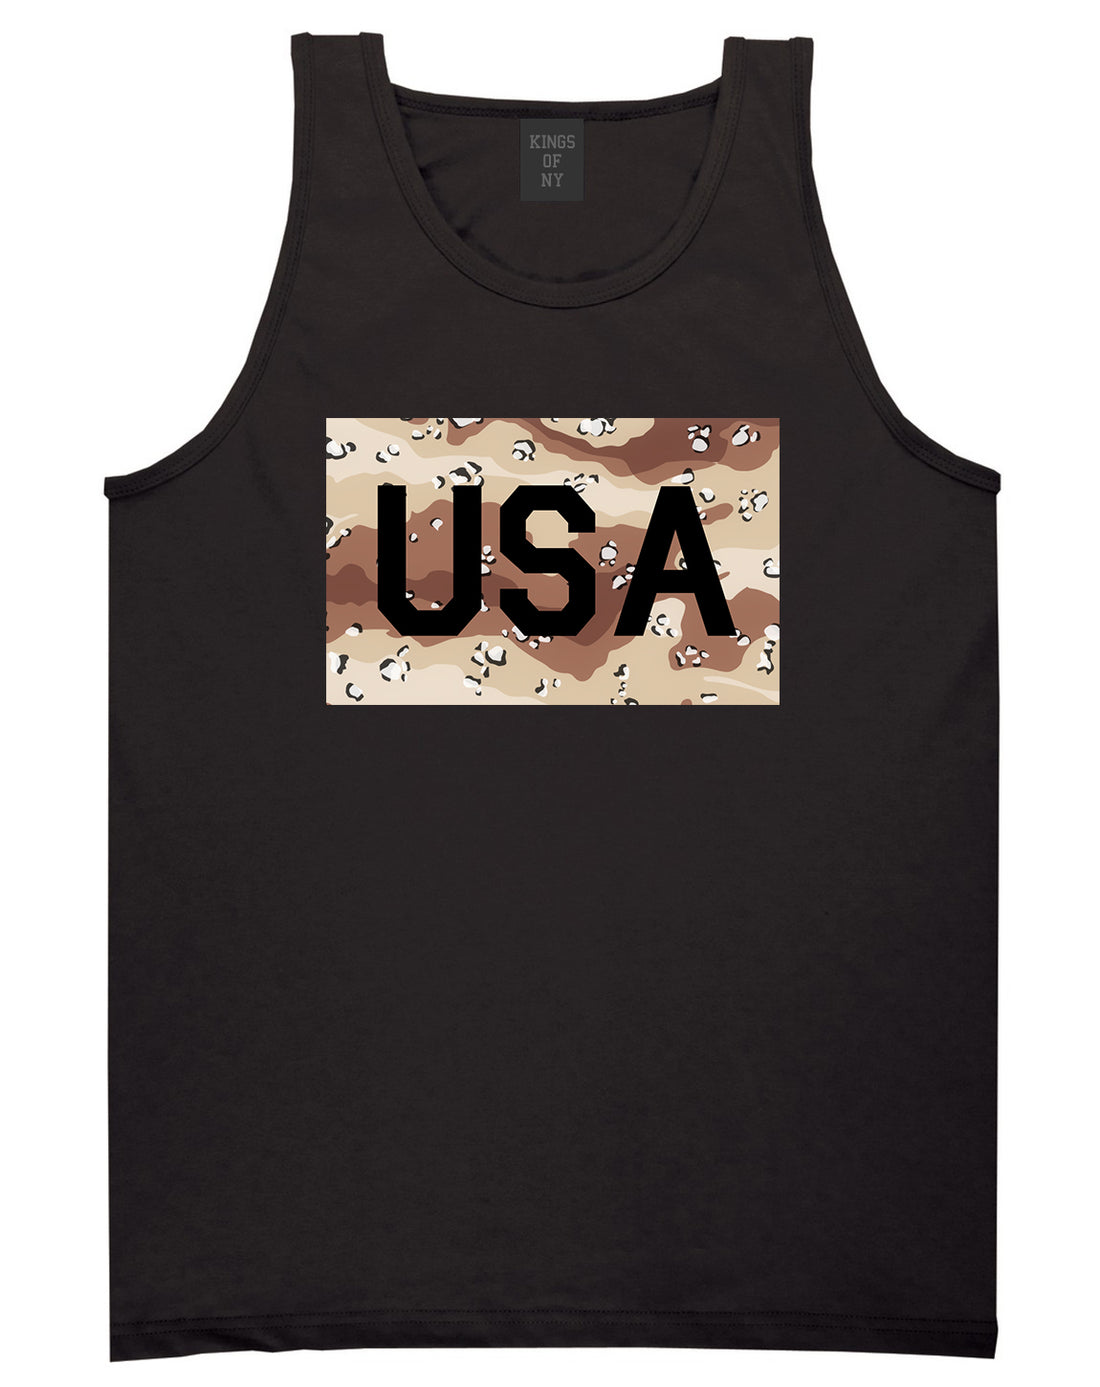 USA_Desert_Camo_Army Mens Black Tank Top Shirt by Kings Of NY